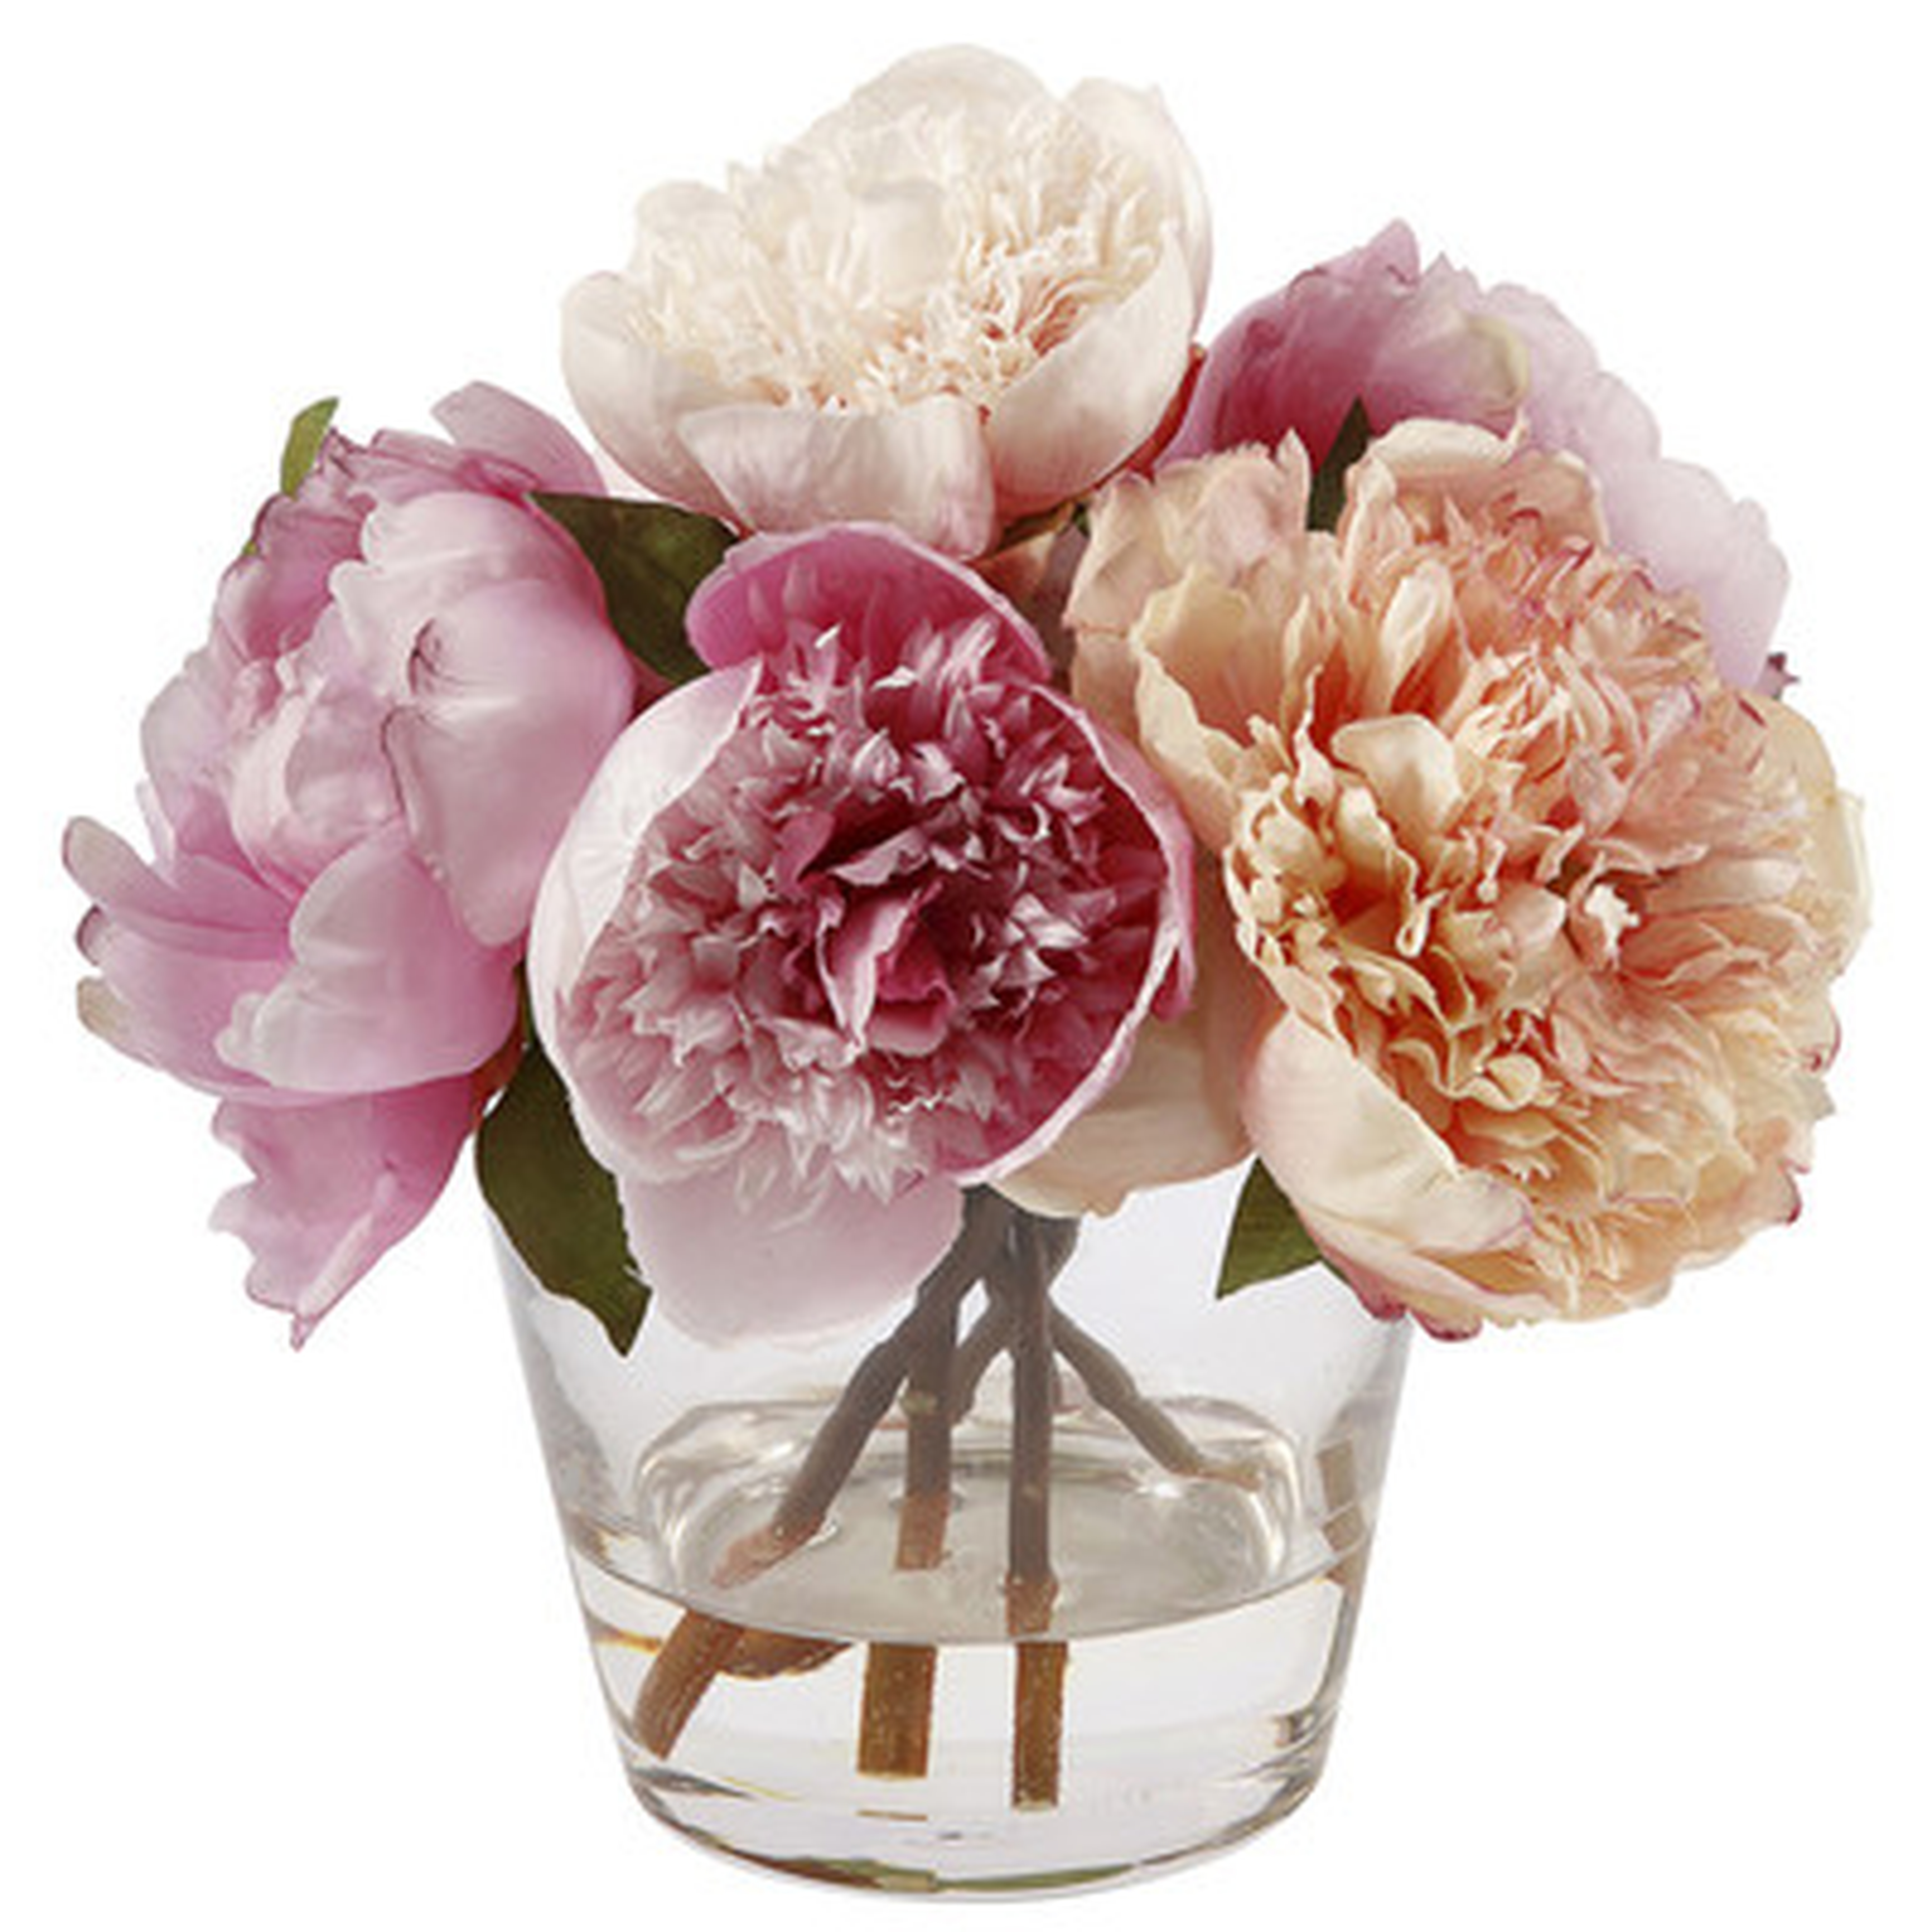 Peonies Floral Arrangement in Glass Vase - Birch Lane